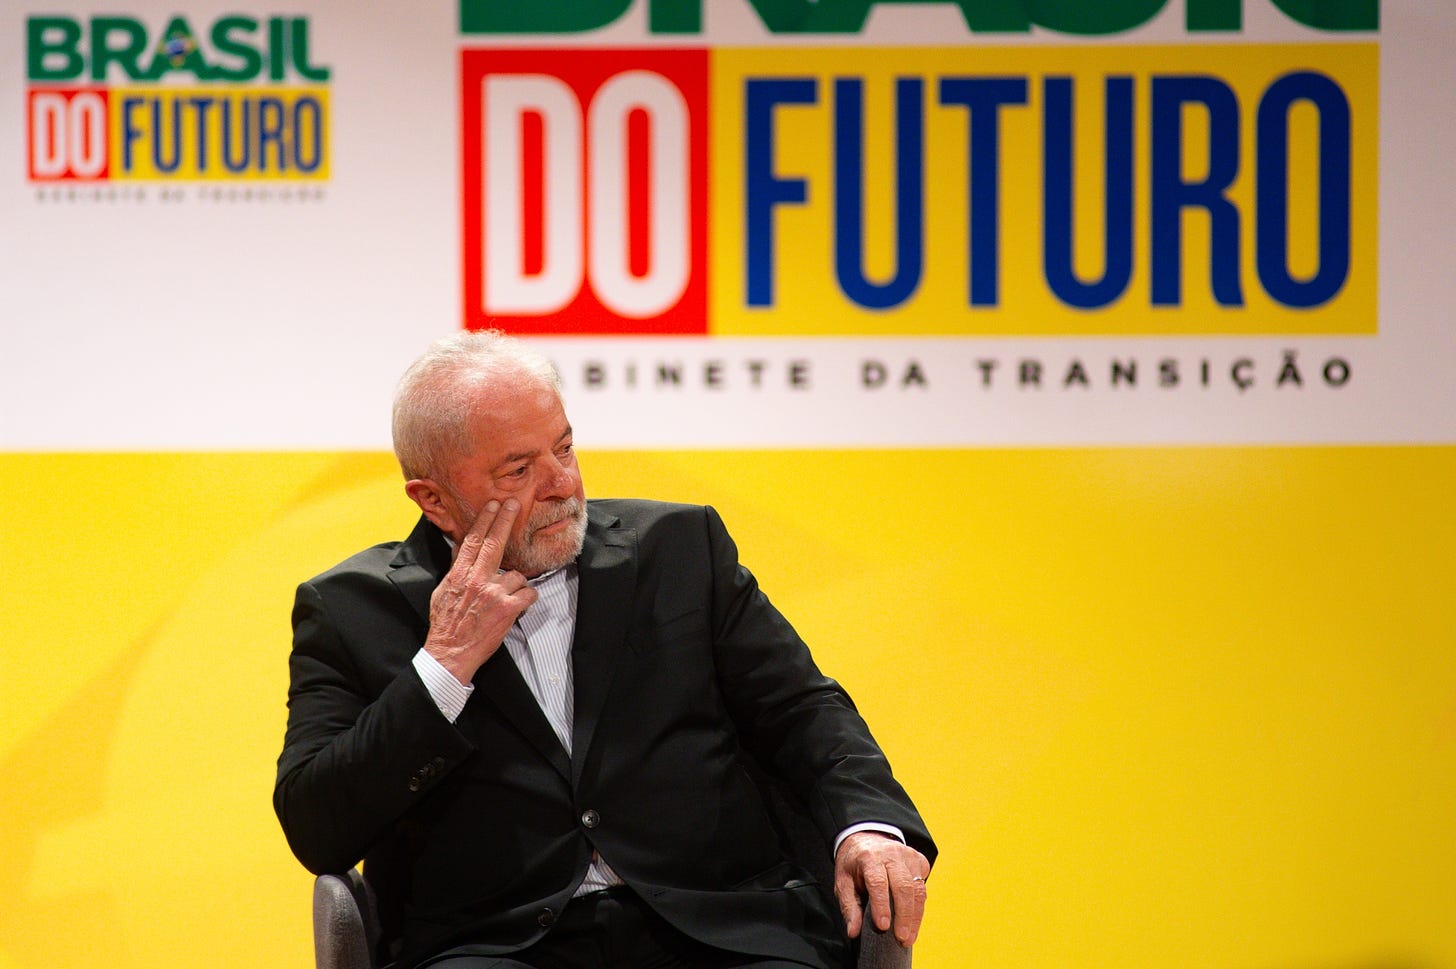 Le président du Brésil Luiz Inacio Lula da Silva durant une conférence de presse. Photo : Andressa Anholete/Bloomberg